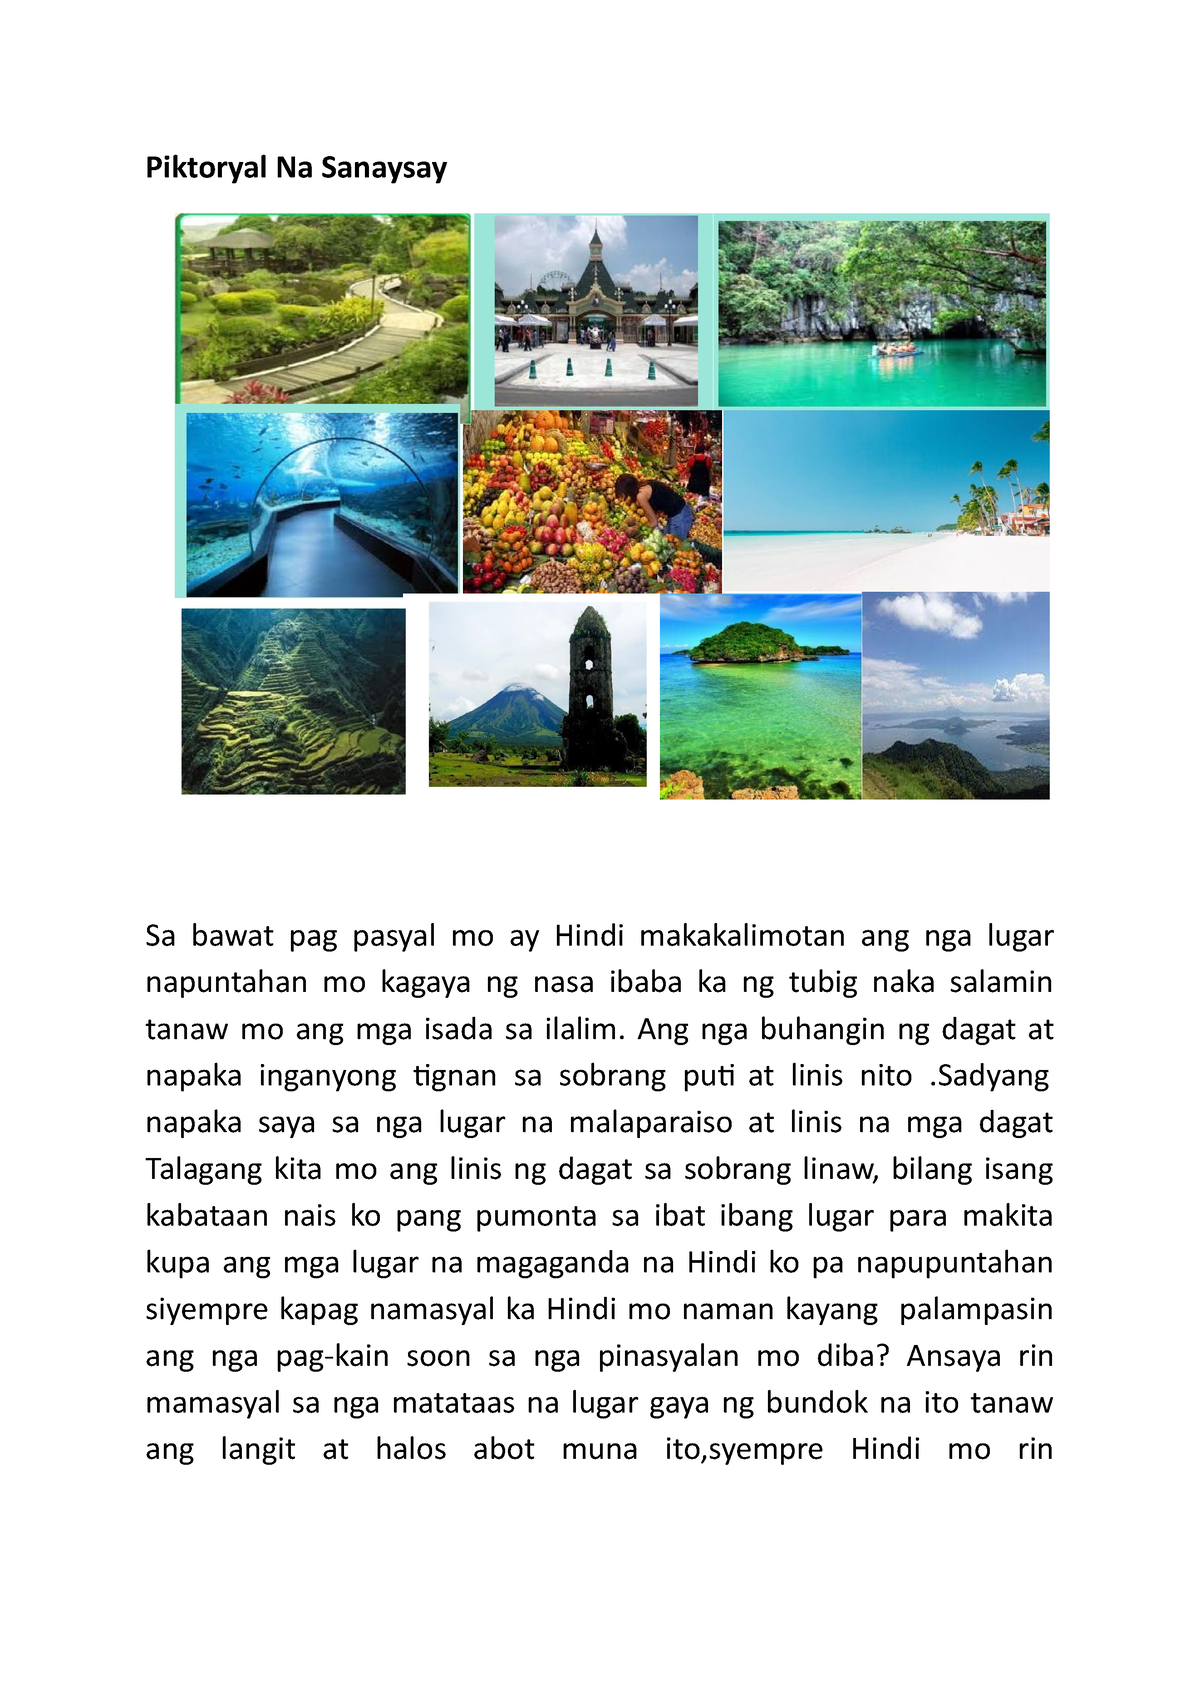 photo essay examples in filipino